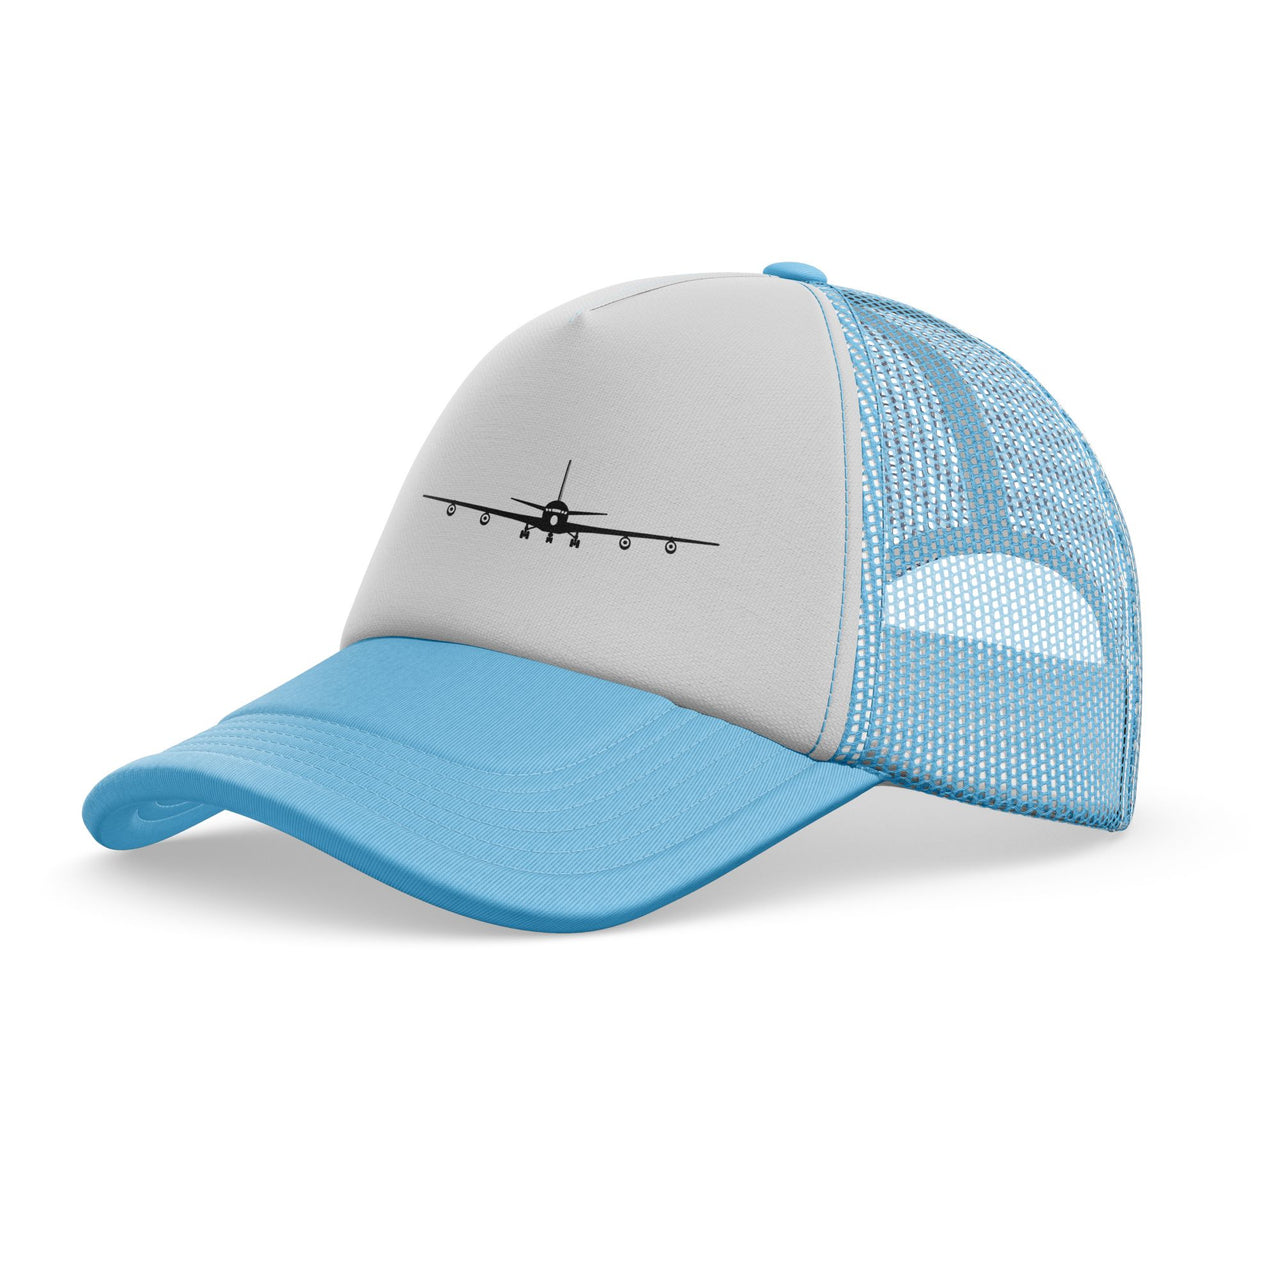 Boeing 707 Silhouette Designed Trucker Caps & Hats